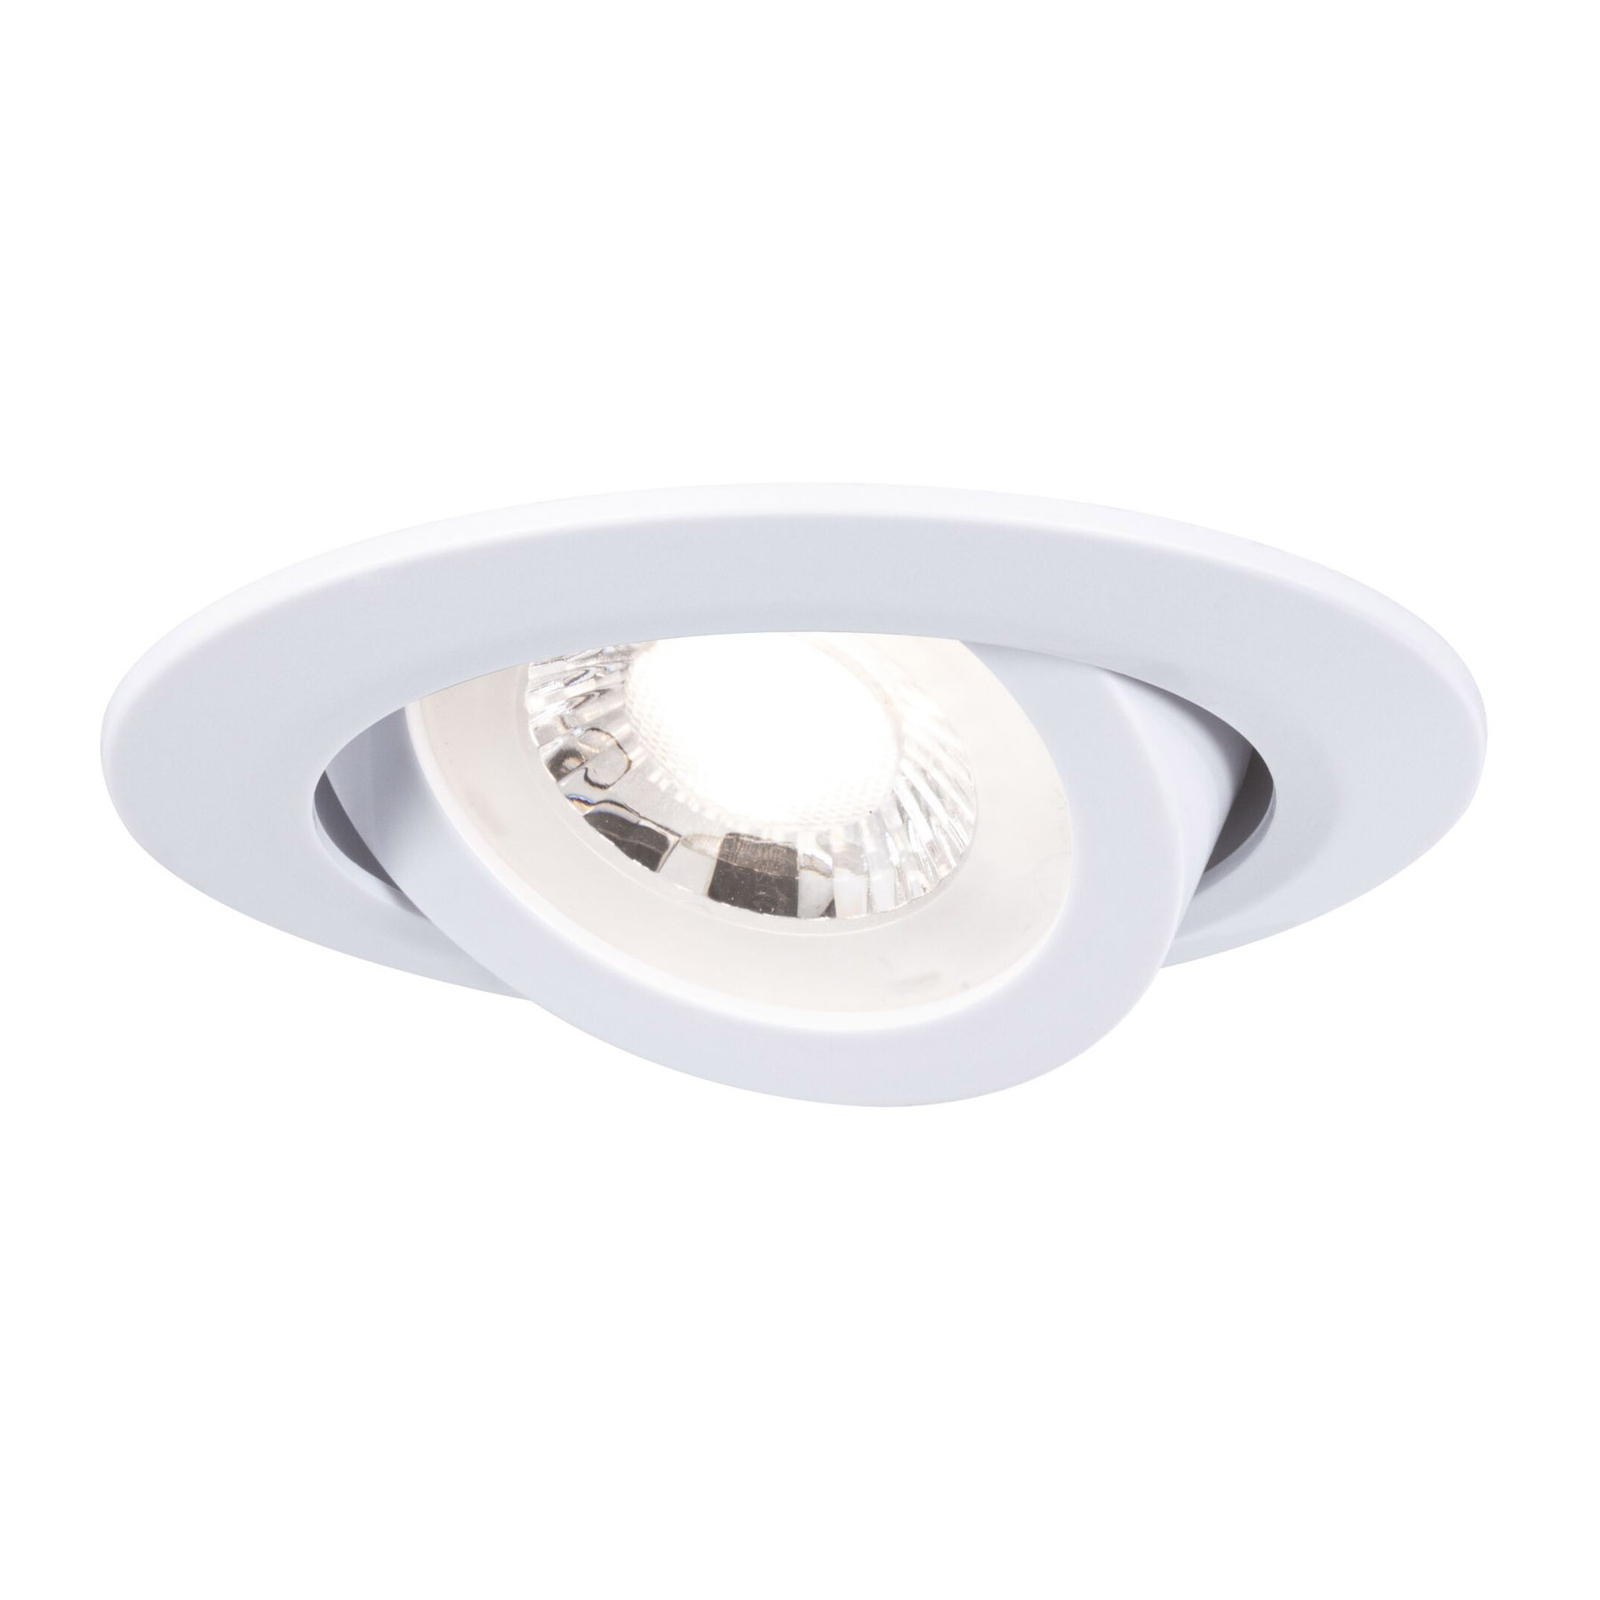 Paulmann 93388 LED recessed light, 3 x 4.8 W white